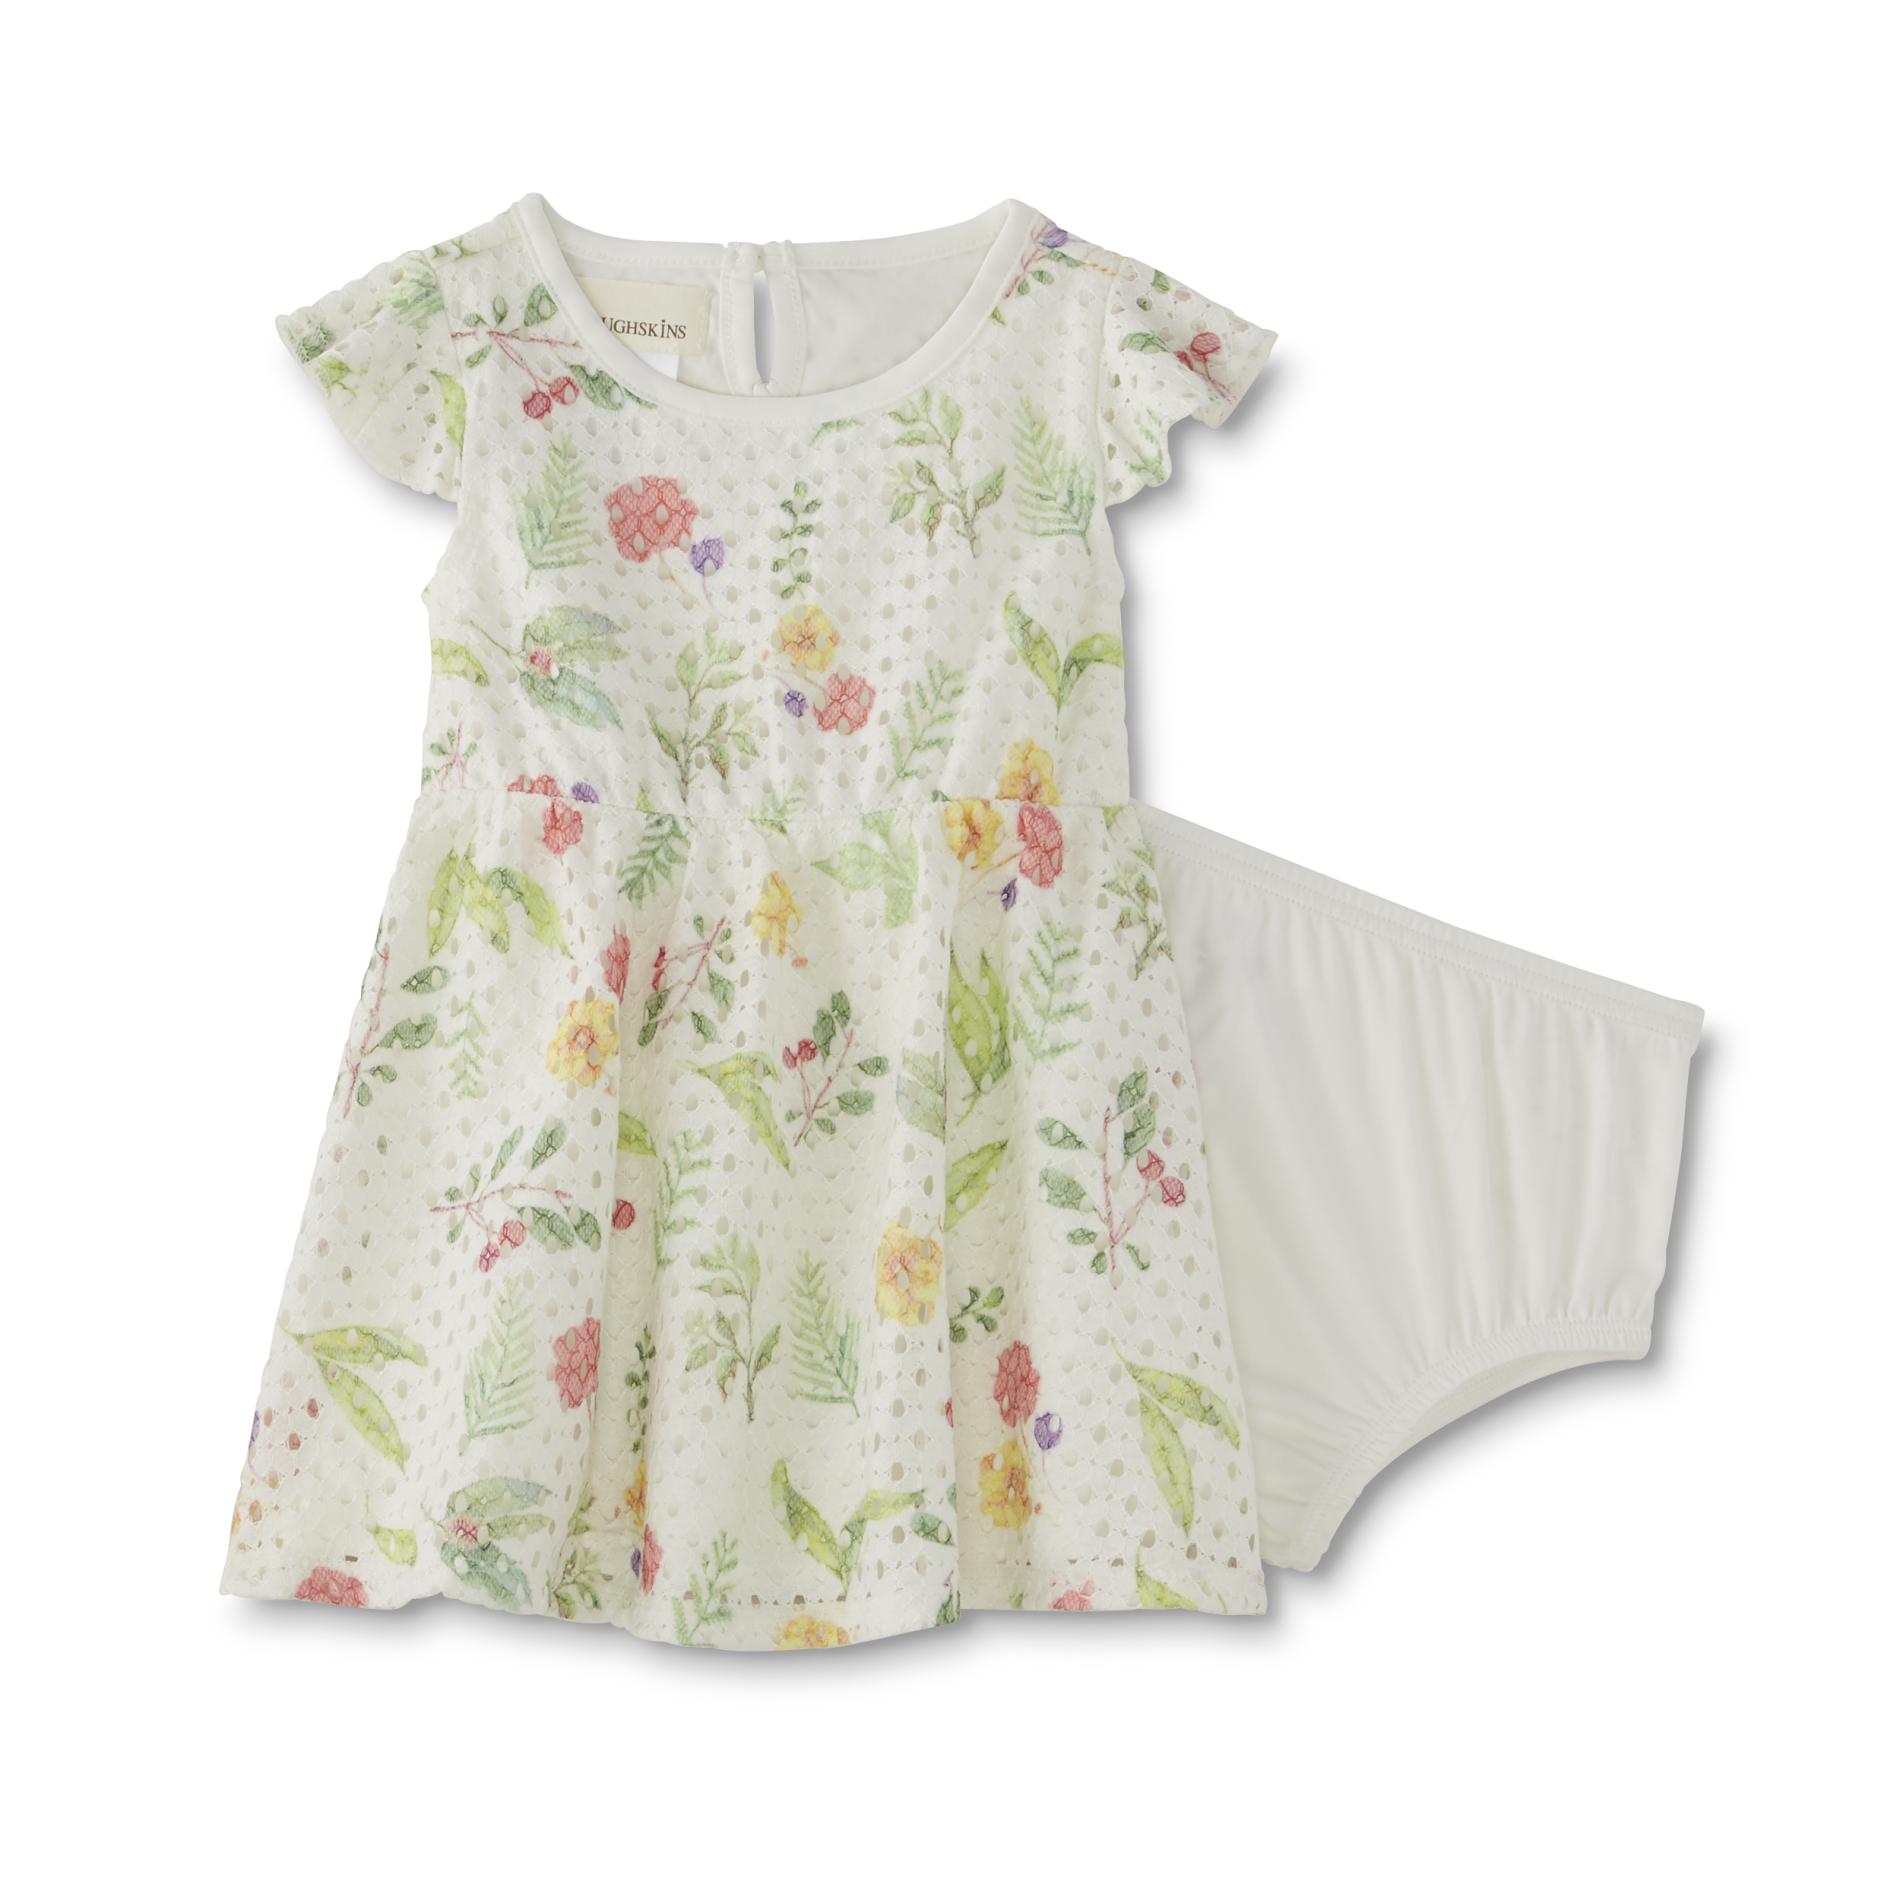 Toughskins Infant Girls' Lace Dress & Diaper Cover - Floral